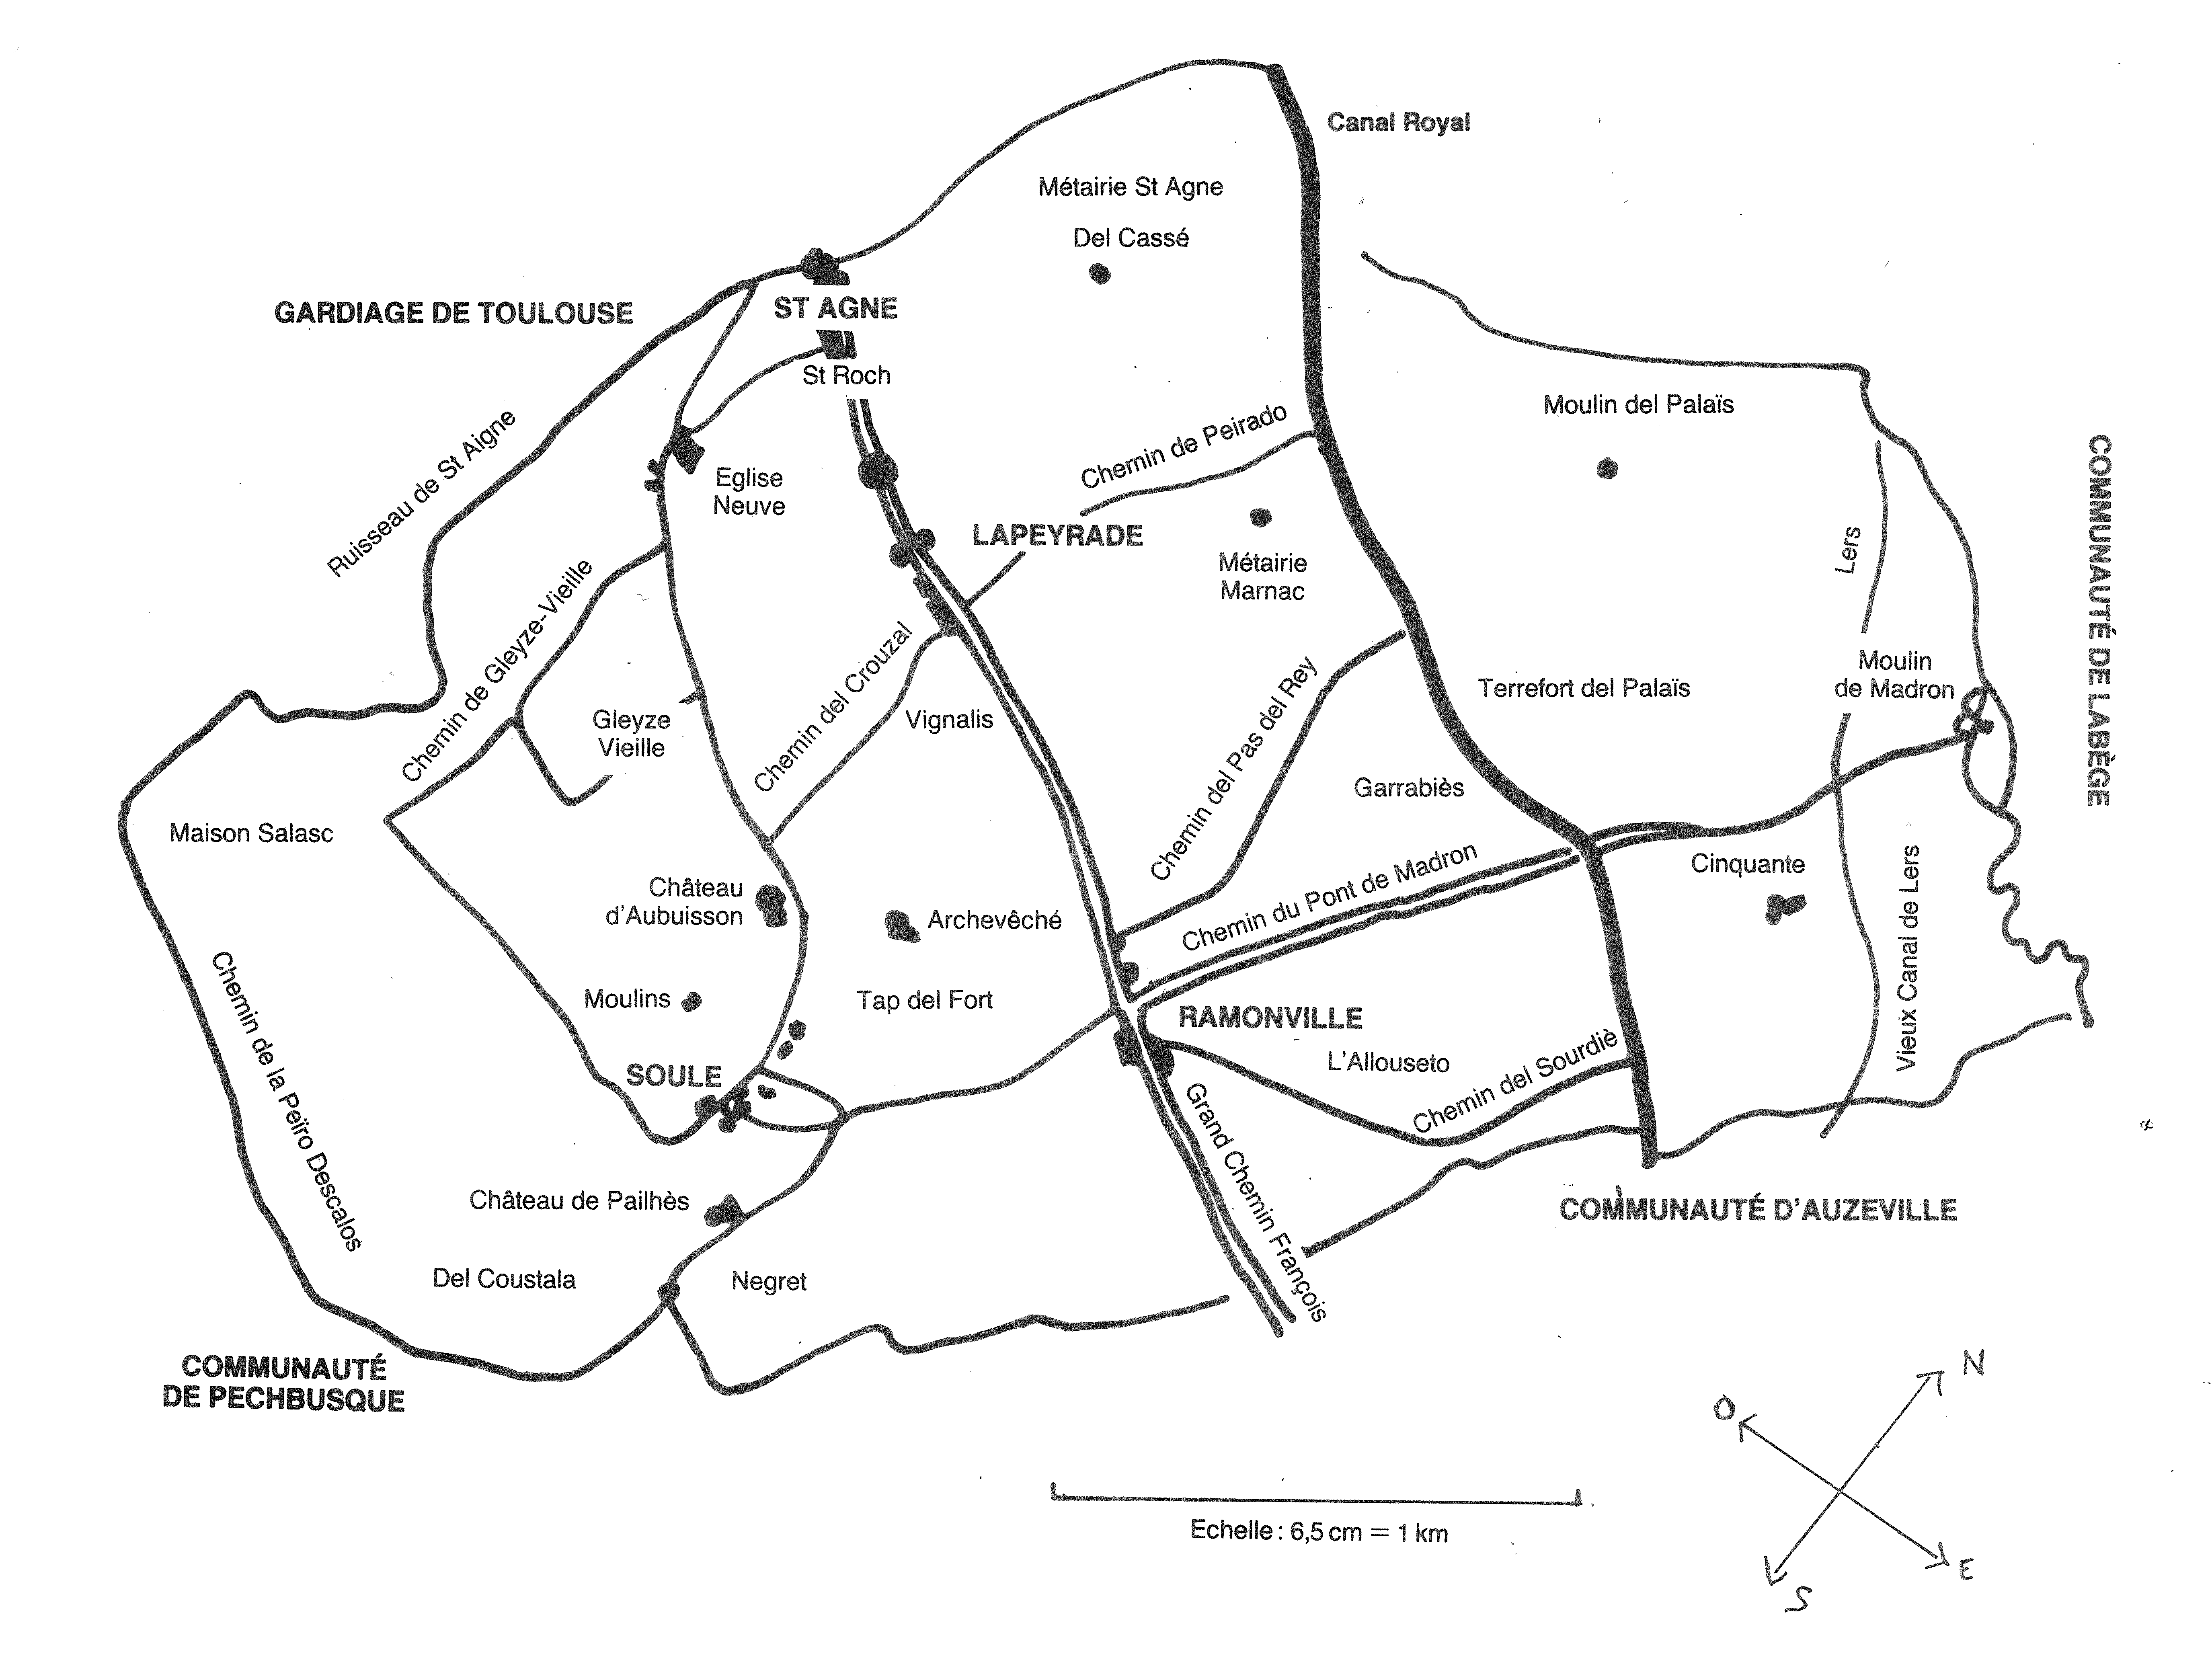 Carte de la communauté de Ramonville à la fin du XVIIIe siècle